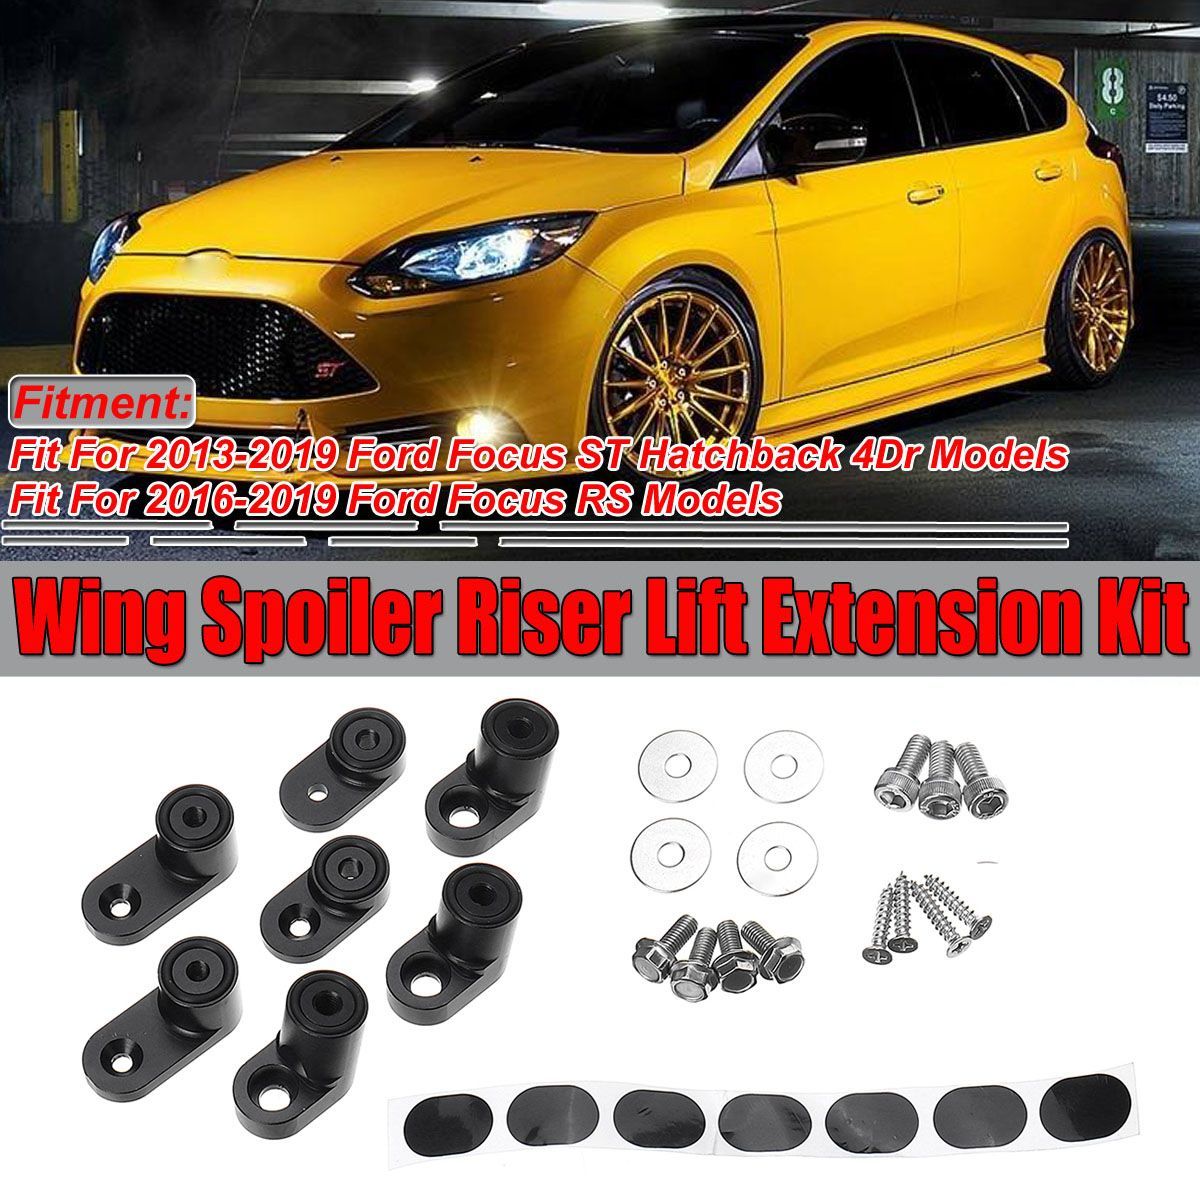 Car-Black-Rear-Wing-Spoiler-Riser-Lift-Extension-Kit-For-2013-2019-Ford-Focus-ST-RS-Hatchback-4Dr-1684257